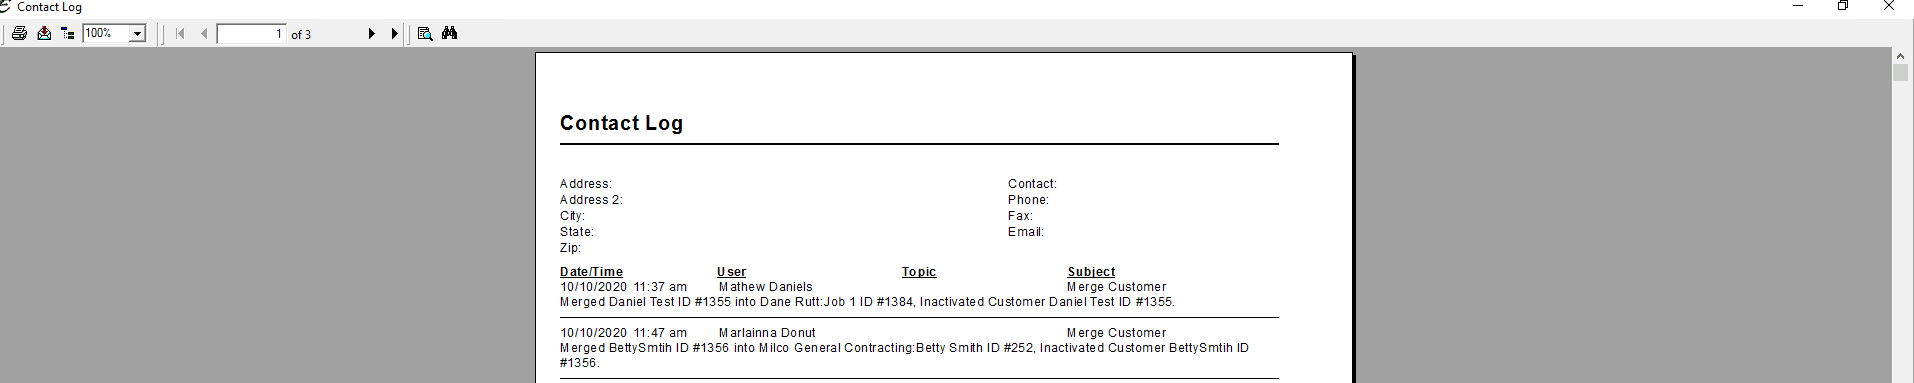 Contact Log (Vendor) PDF